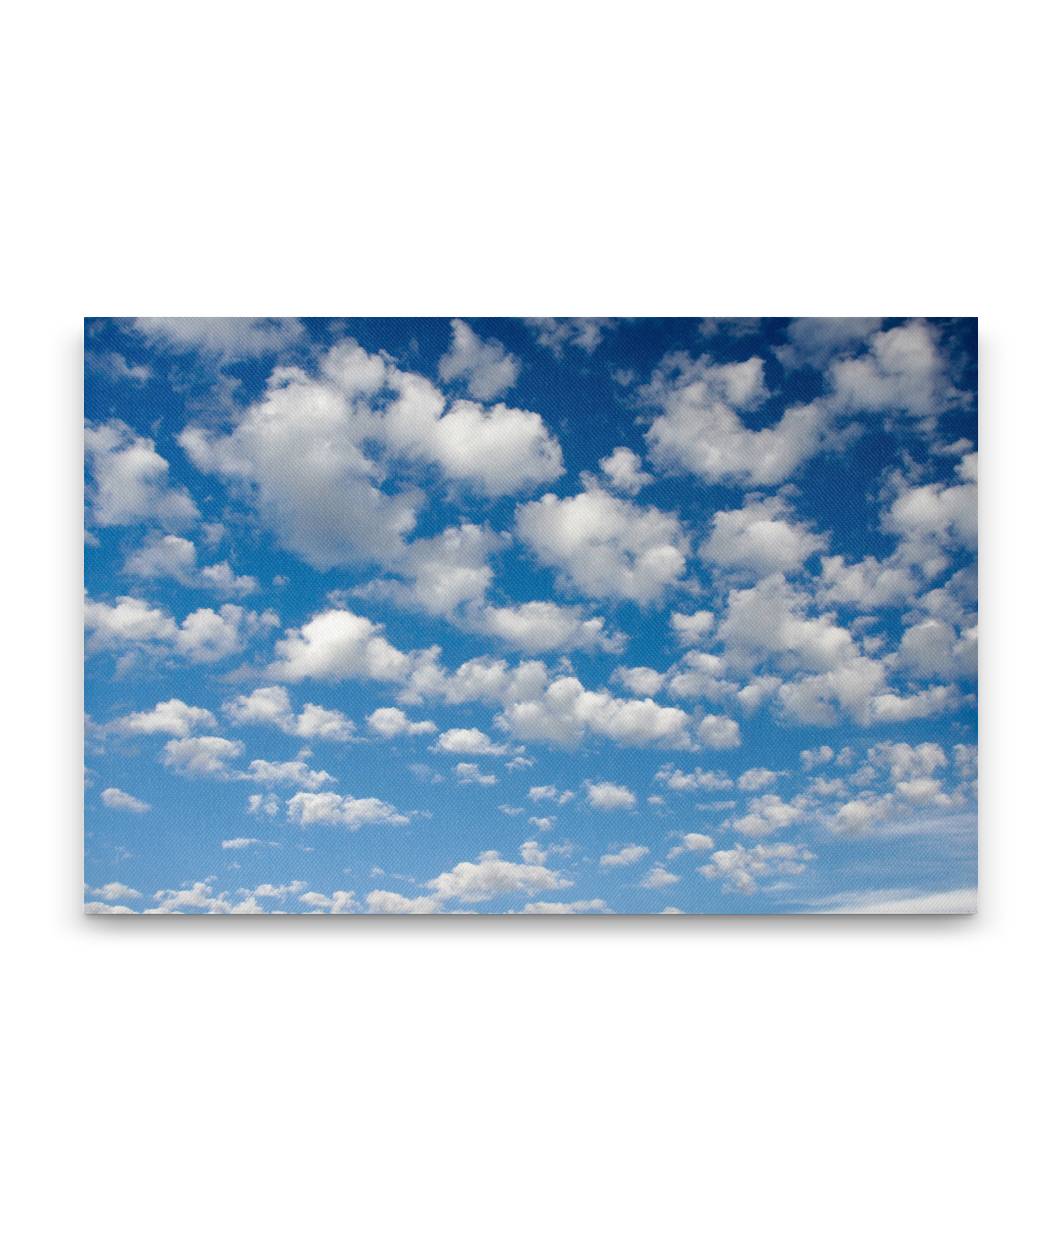 Cirrus Clouds and Blue Sky Over Cascades Mountains, Carpenter Mountain, Oregon